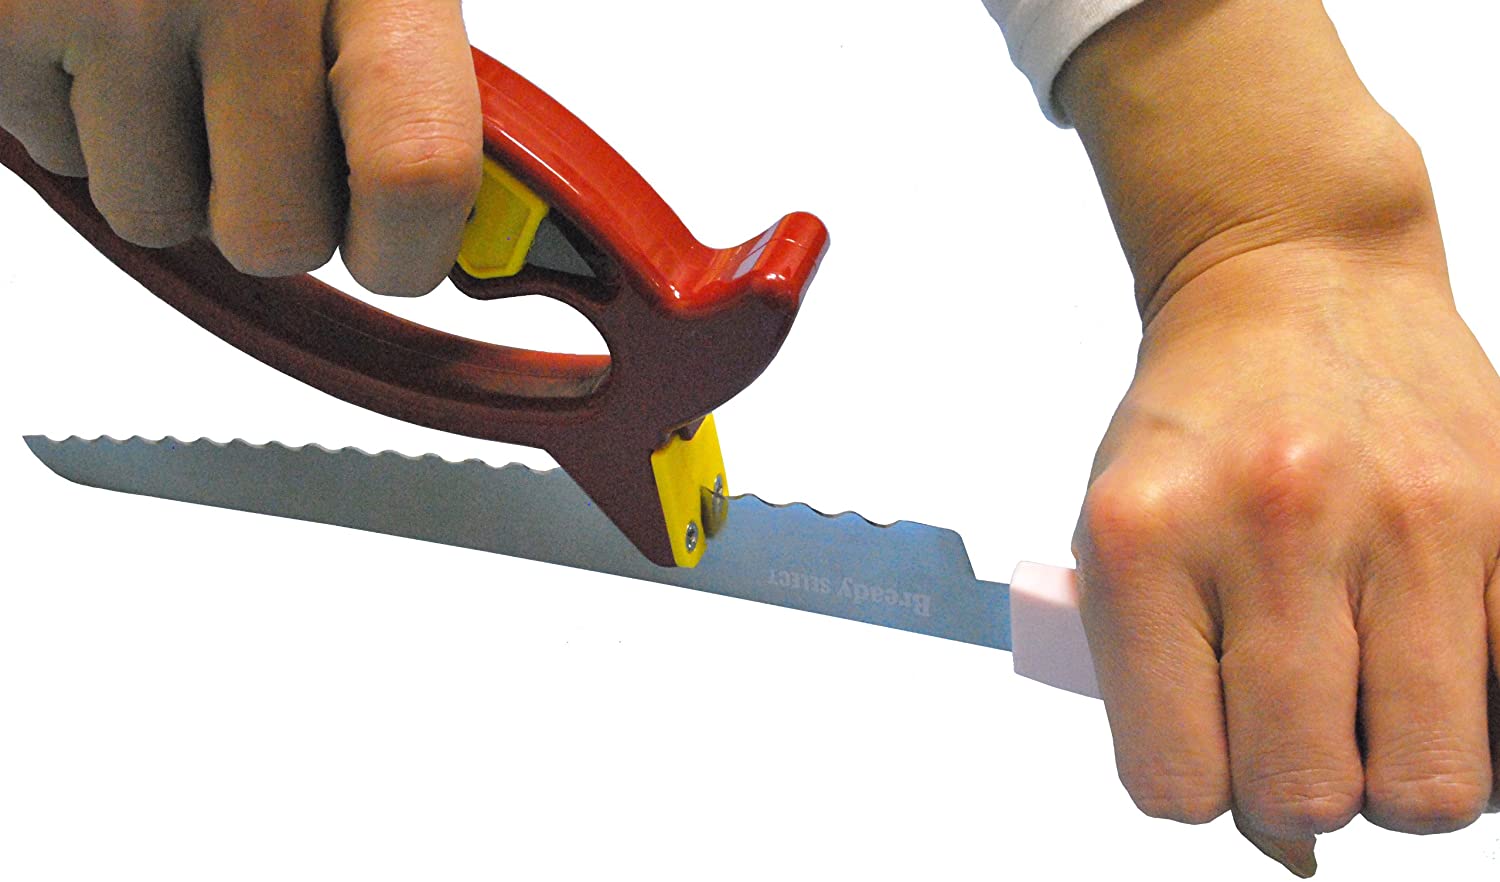 Sol.Inge Multipurpose Knife Sharpener Tool - For Serrated Knives, Scissors, Chisels and More - Red